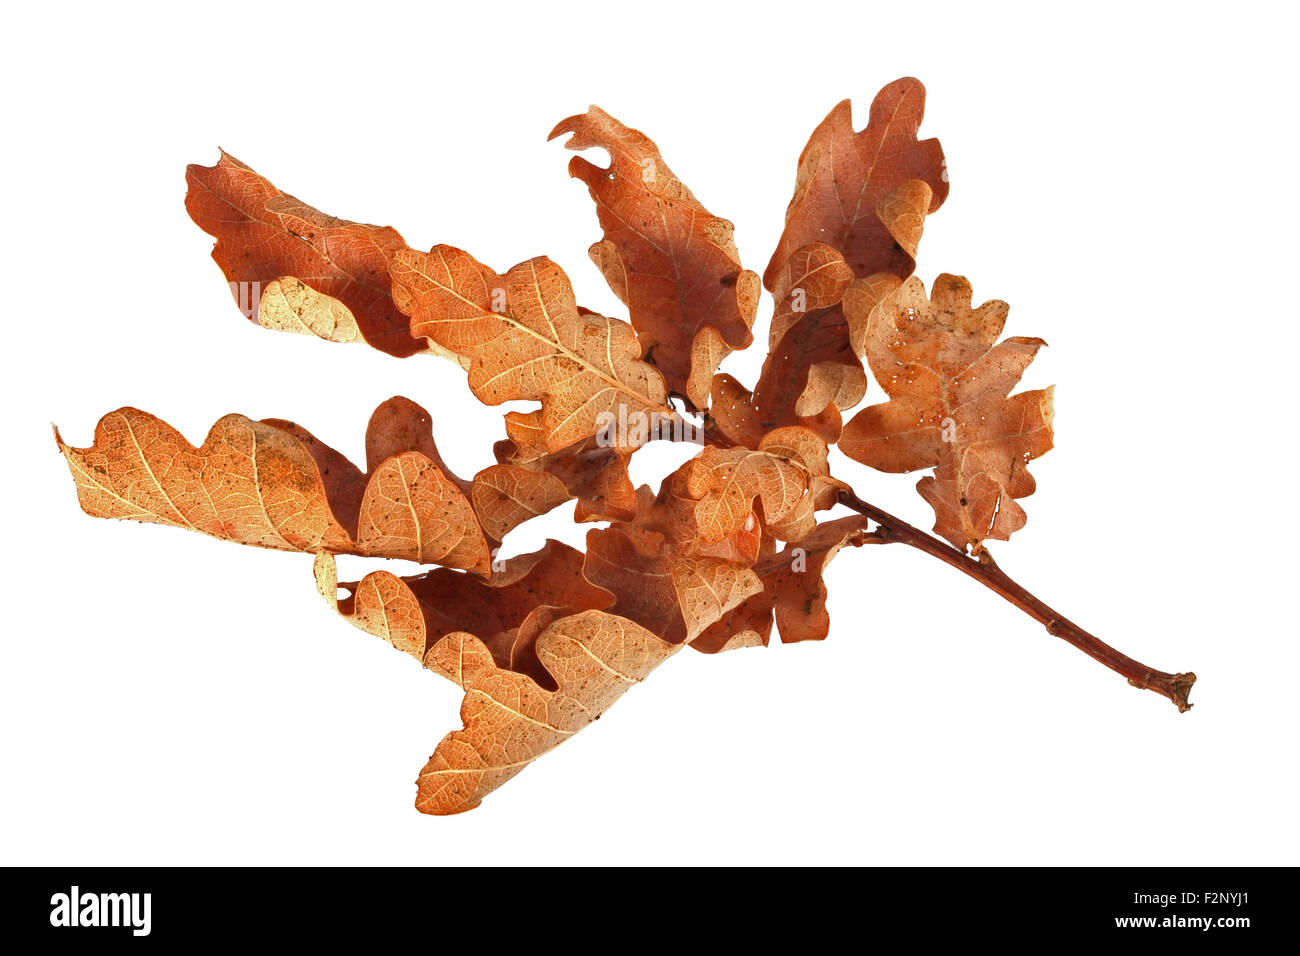 Autumn oak leaves on a plain white background Stock Photo